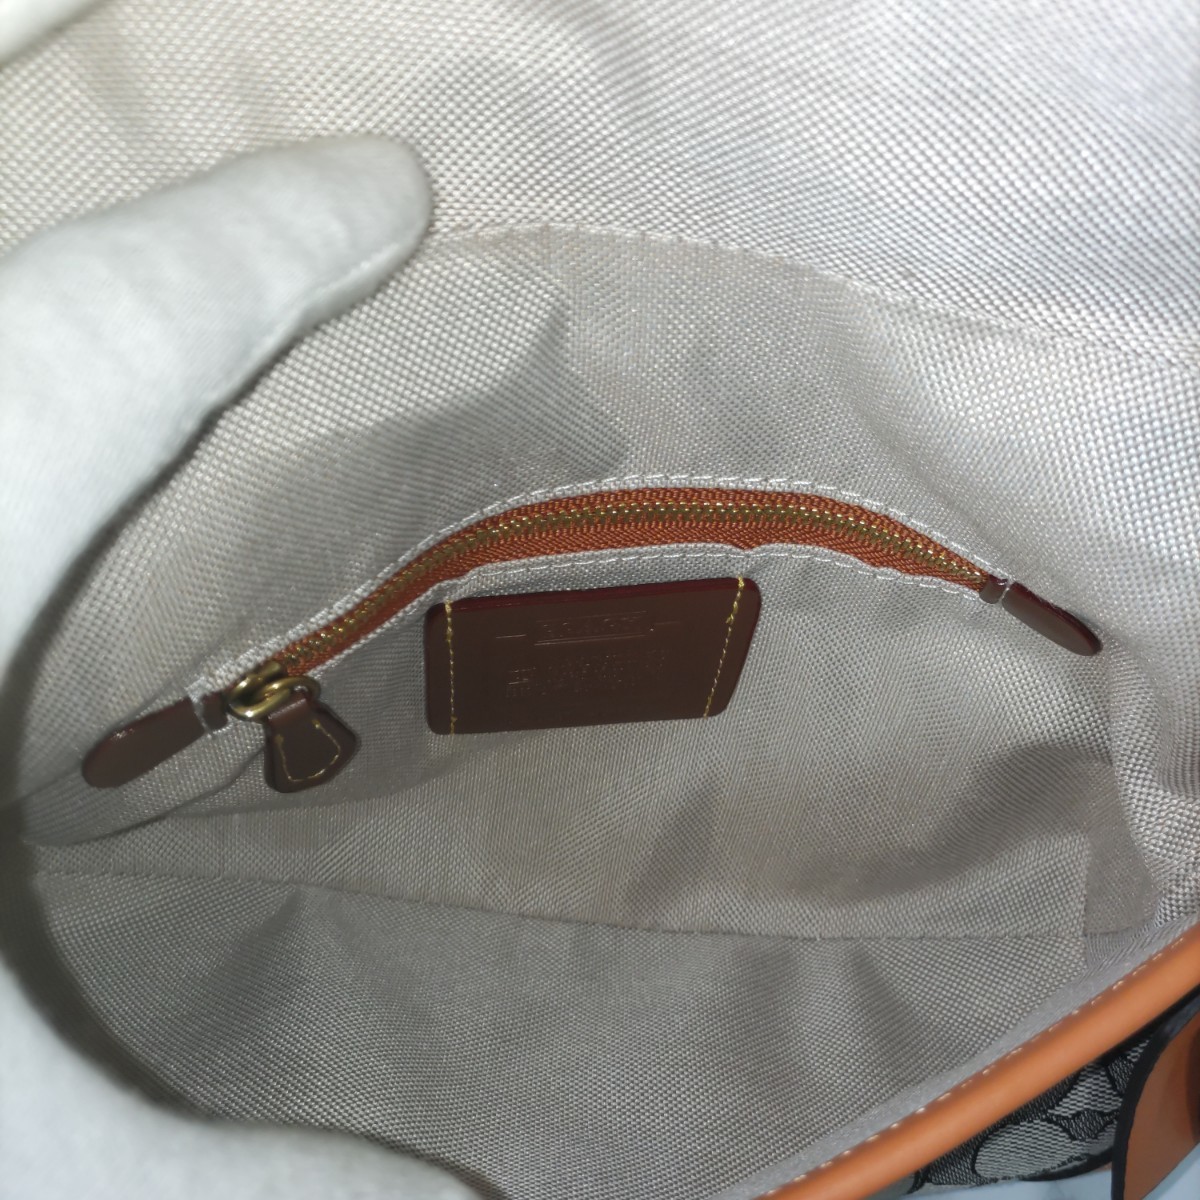 COACH Coach handbag shoulder bag new work unused orange 